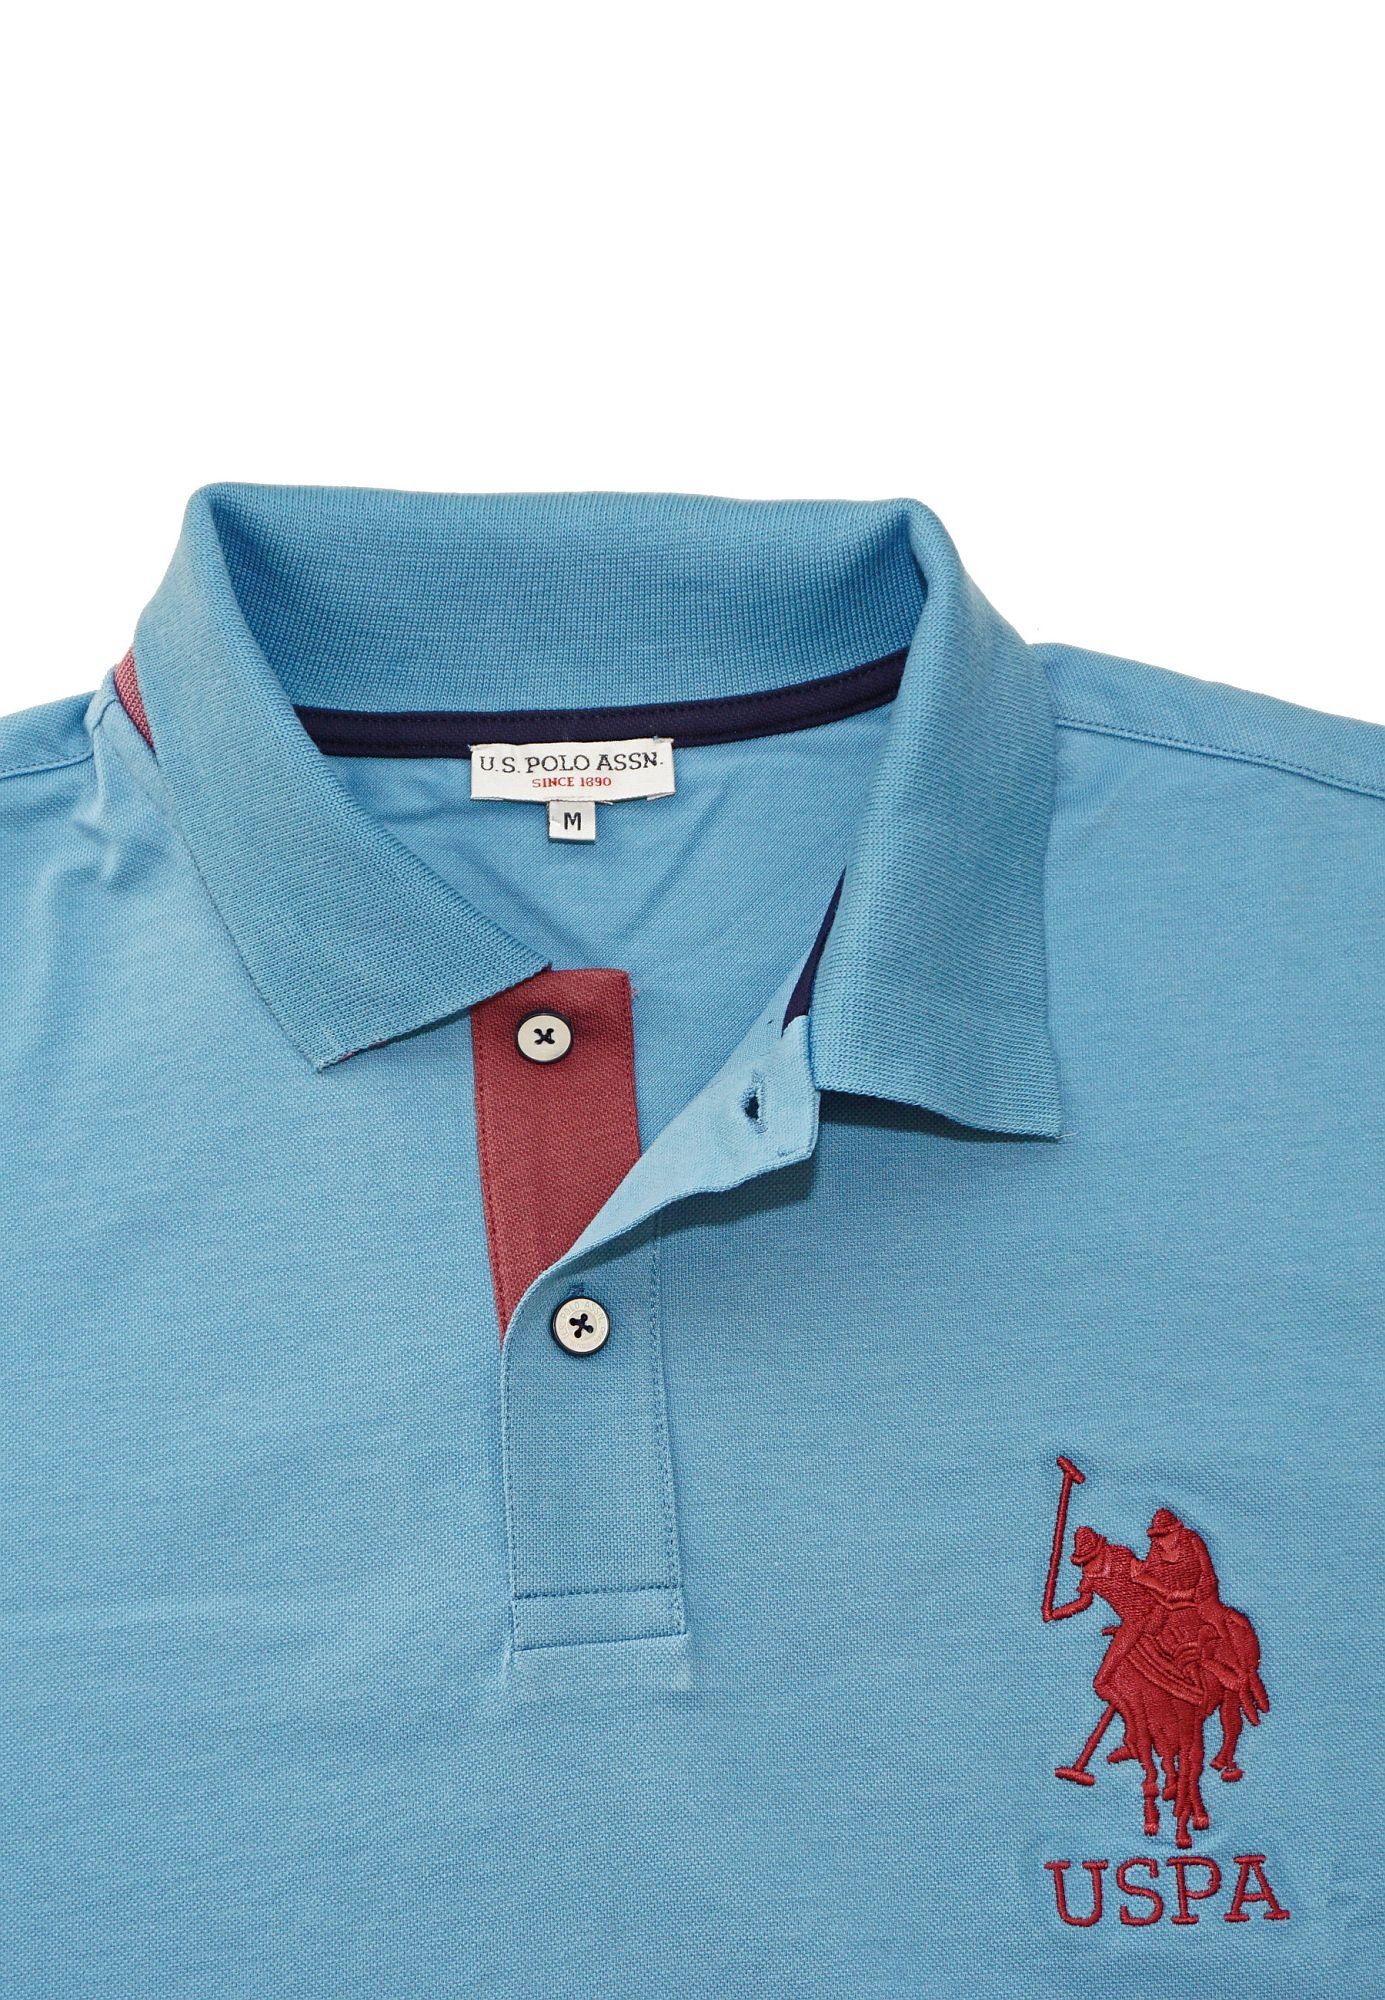 U.S. Polo Assn Poloshirt Shirt Poloshirt Kory Polohemd hellblau